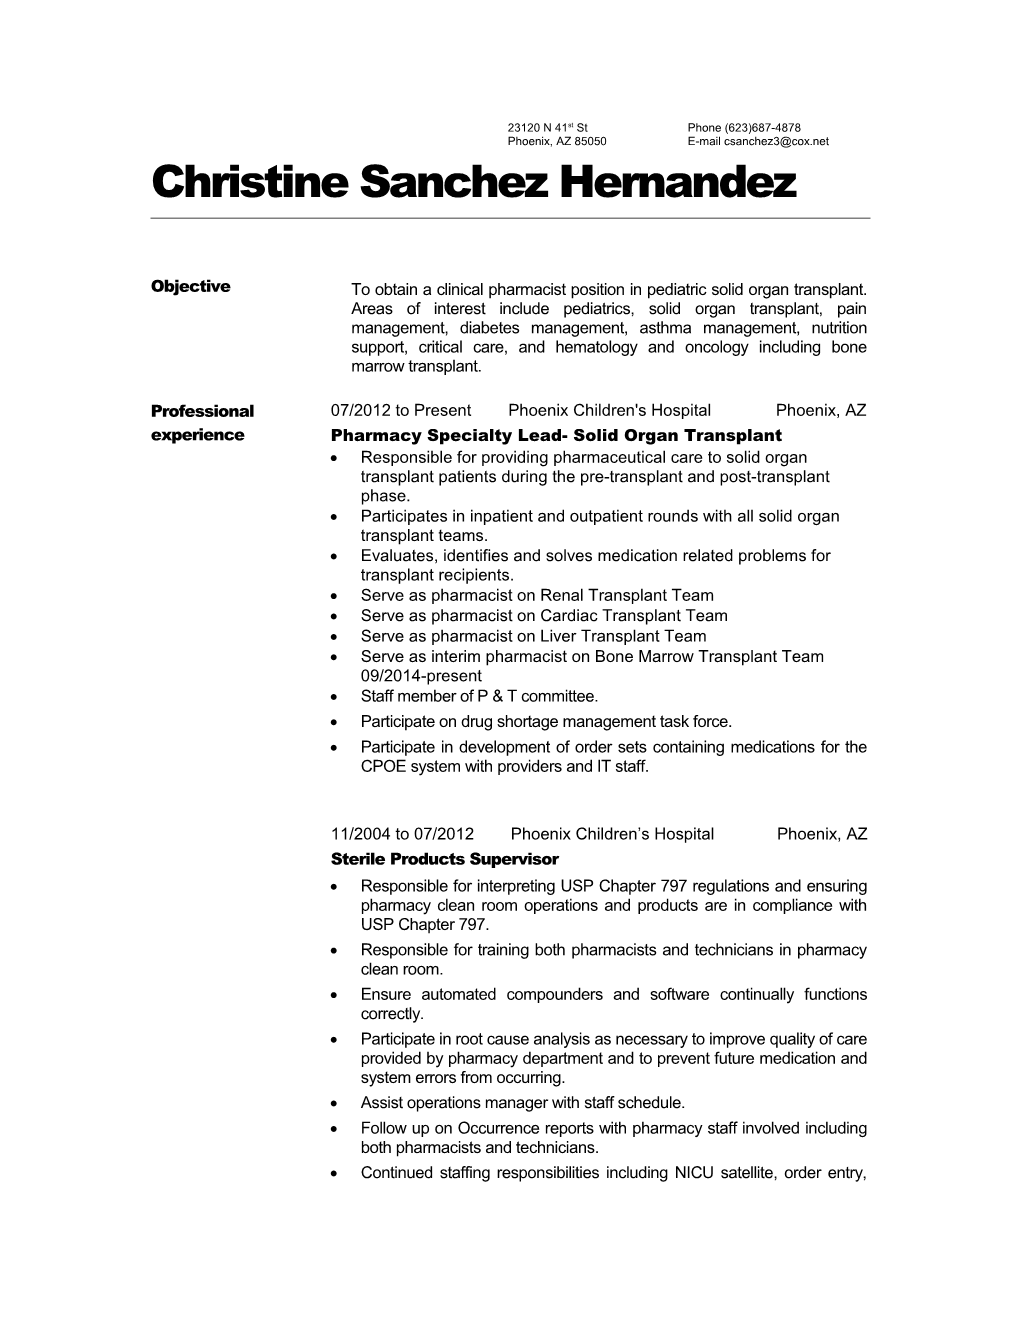 Christine Sanchez Hernandez